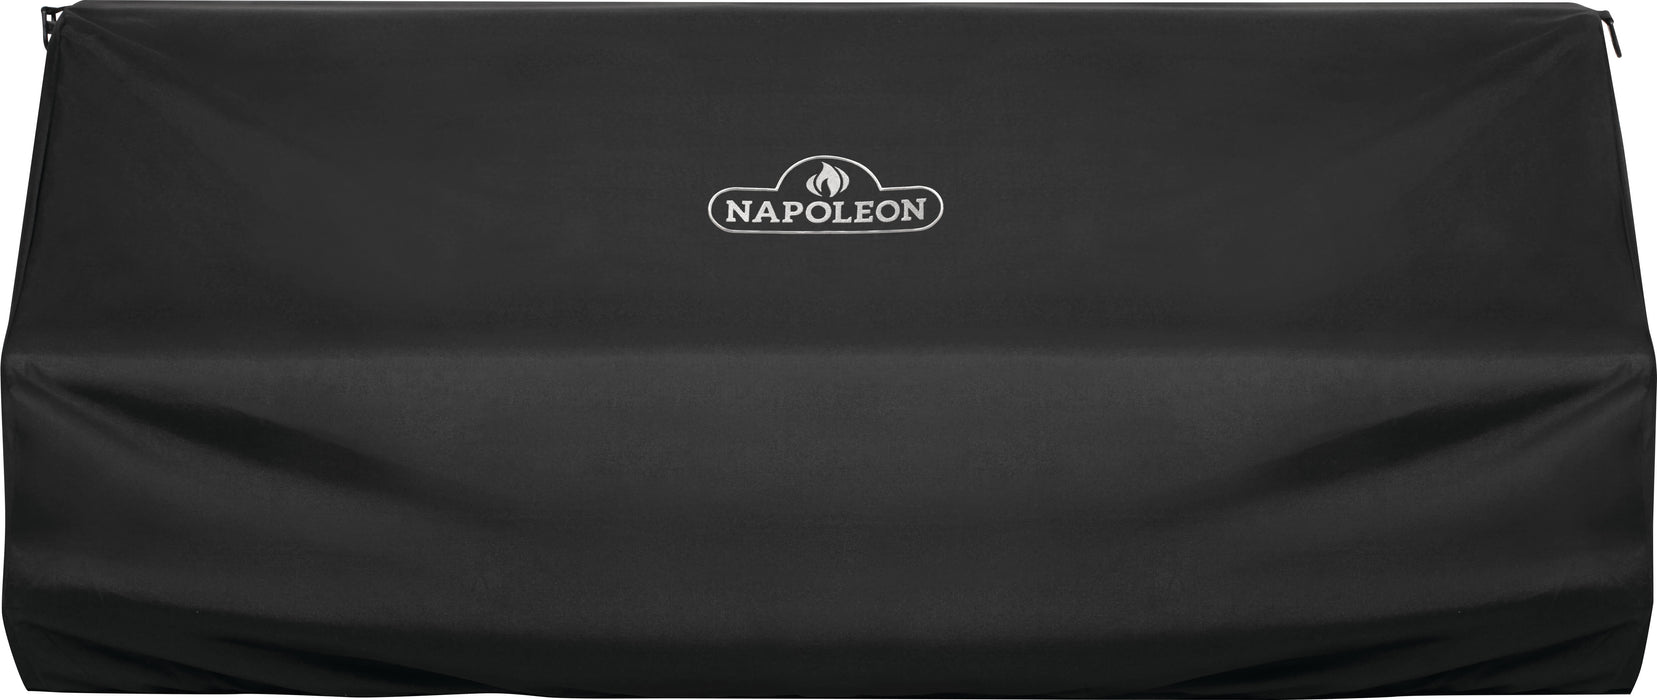 Napoleon Prestige PRO 825 RBI Built-in Gas Grill